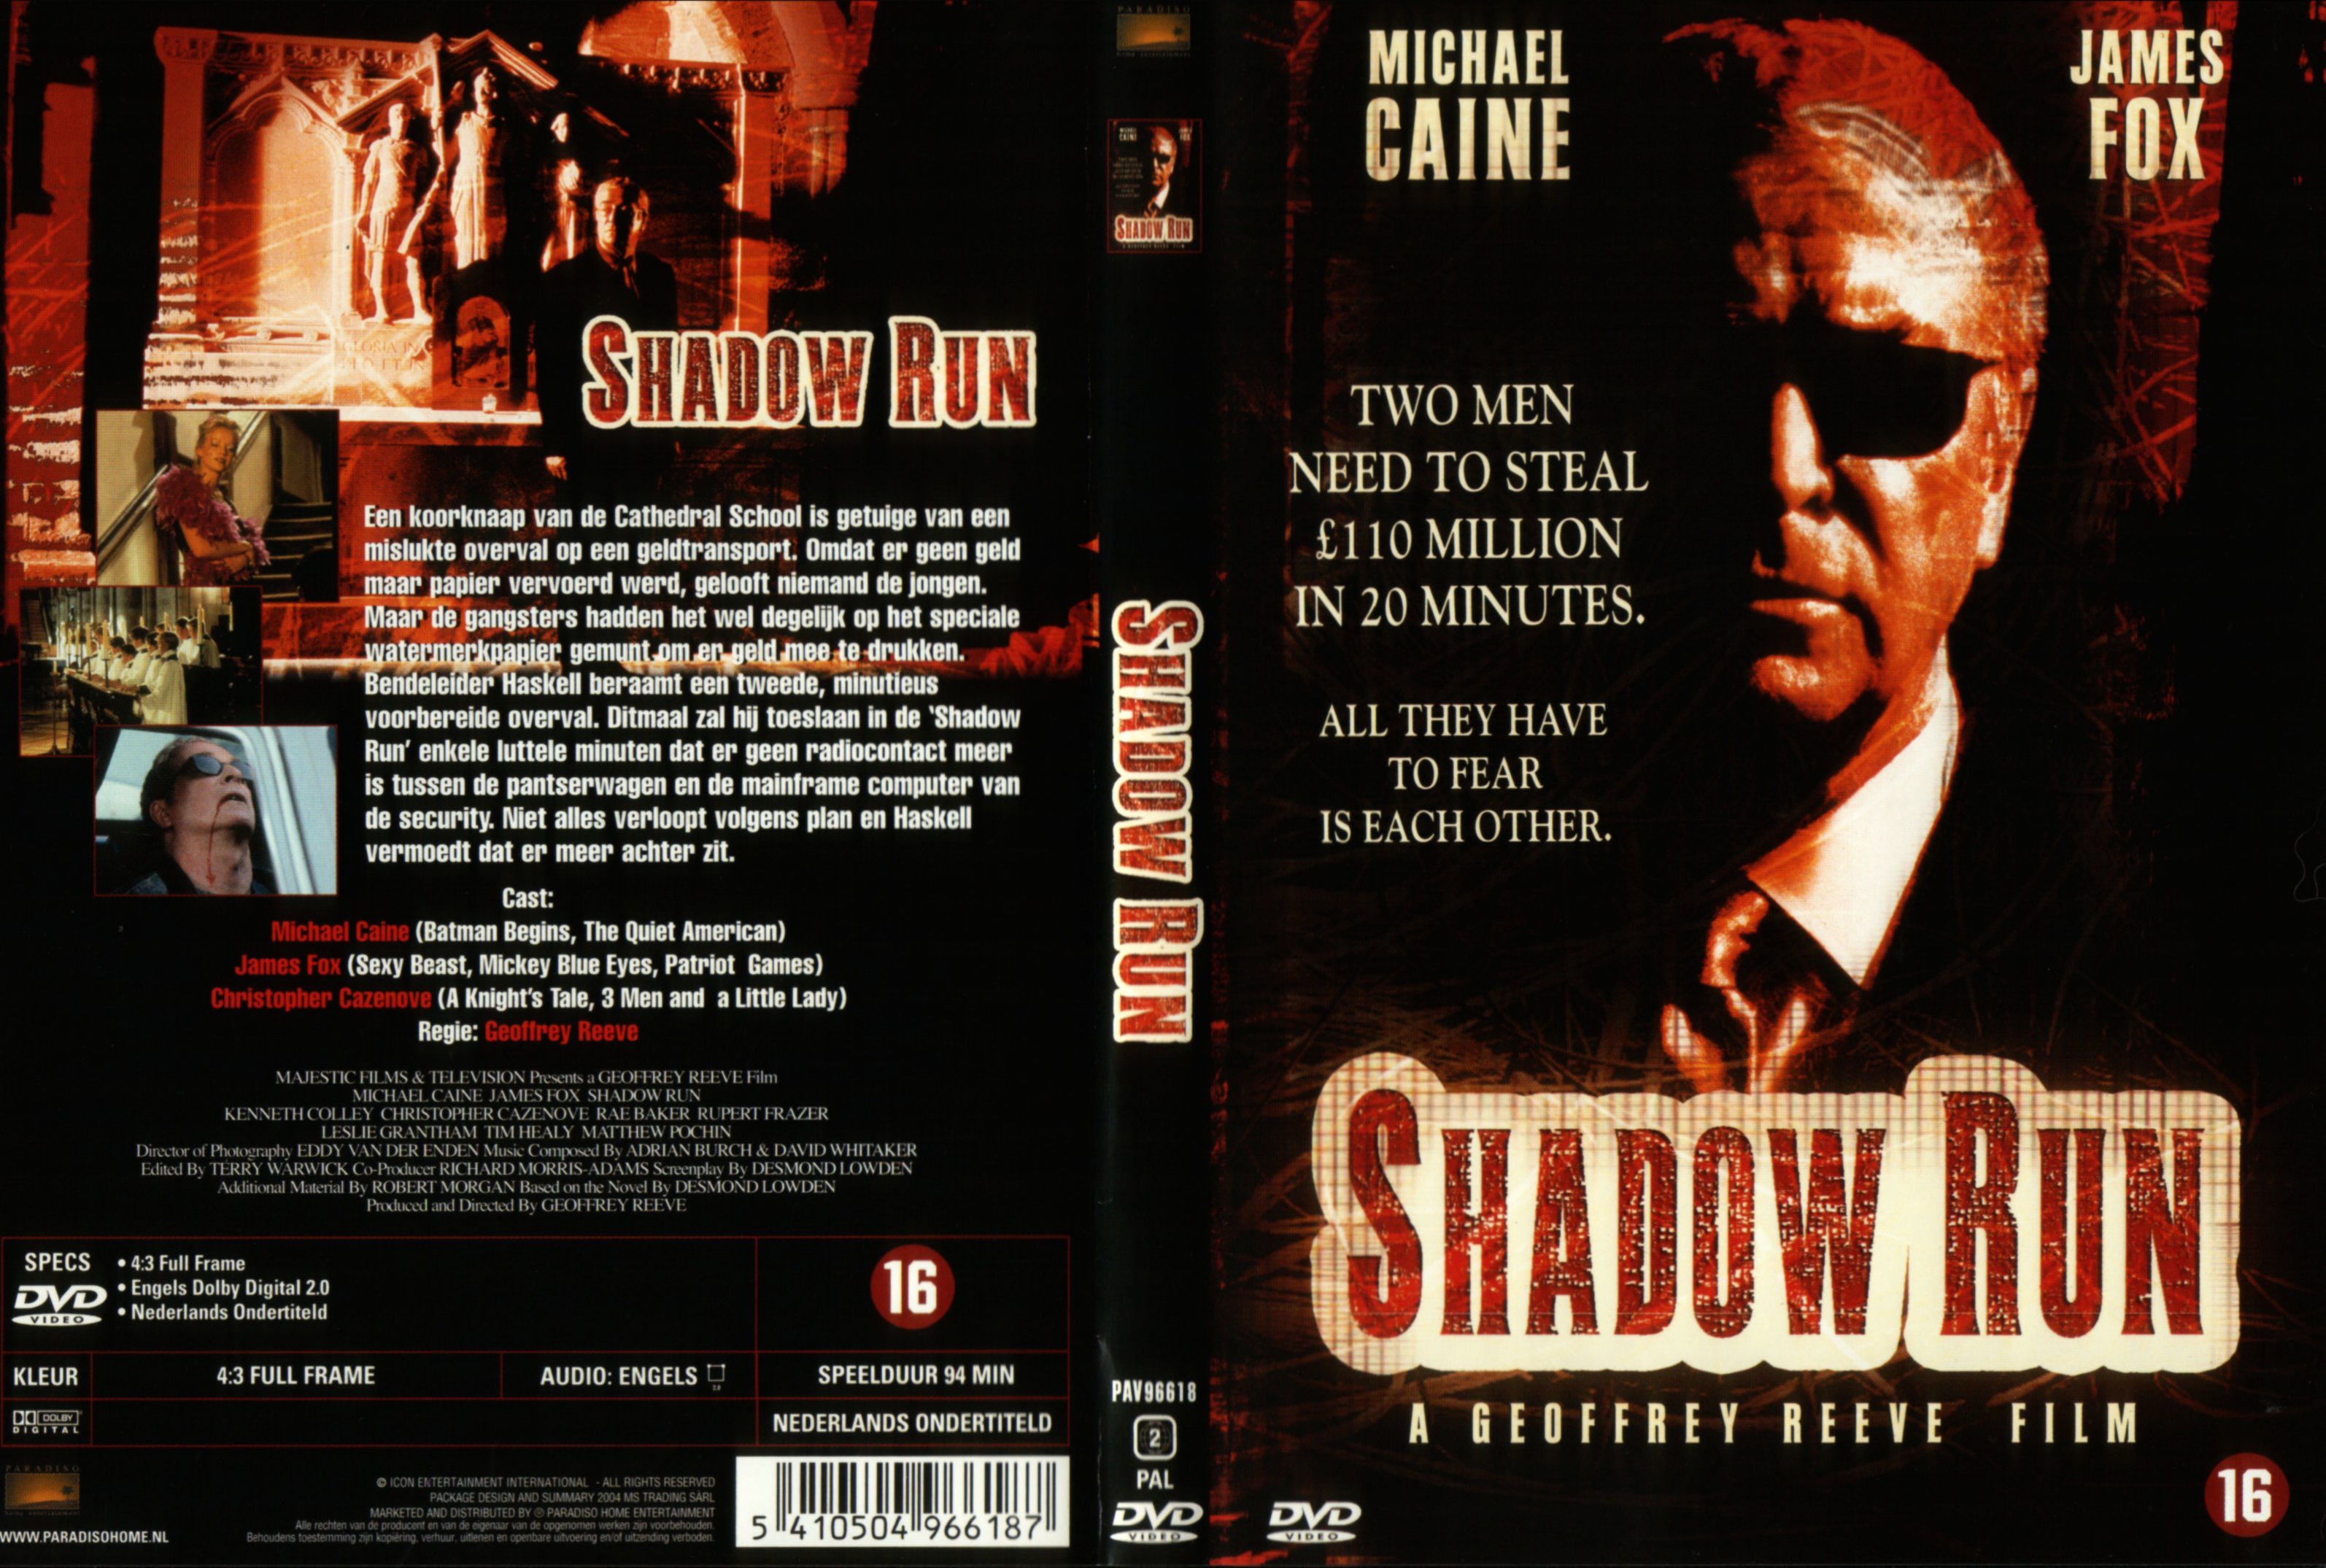 Jaquette DVD Shadow run Zone 1